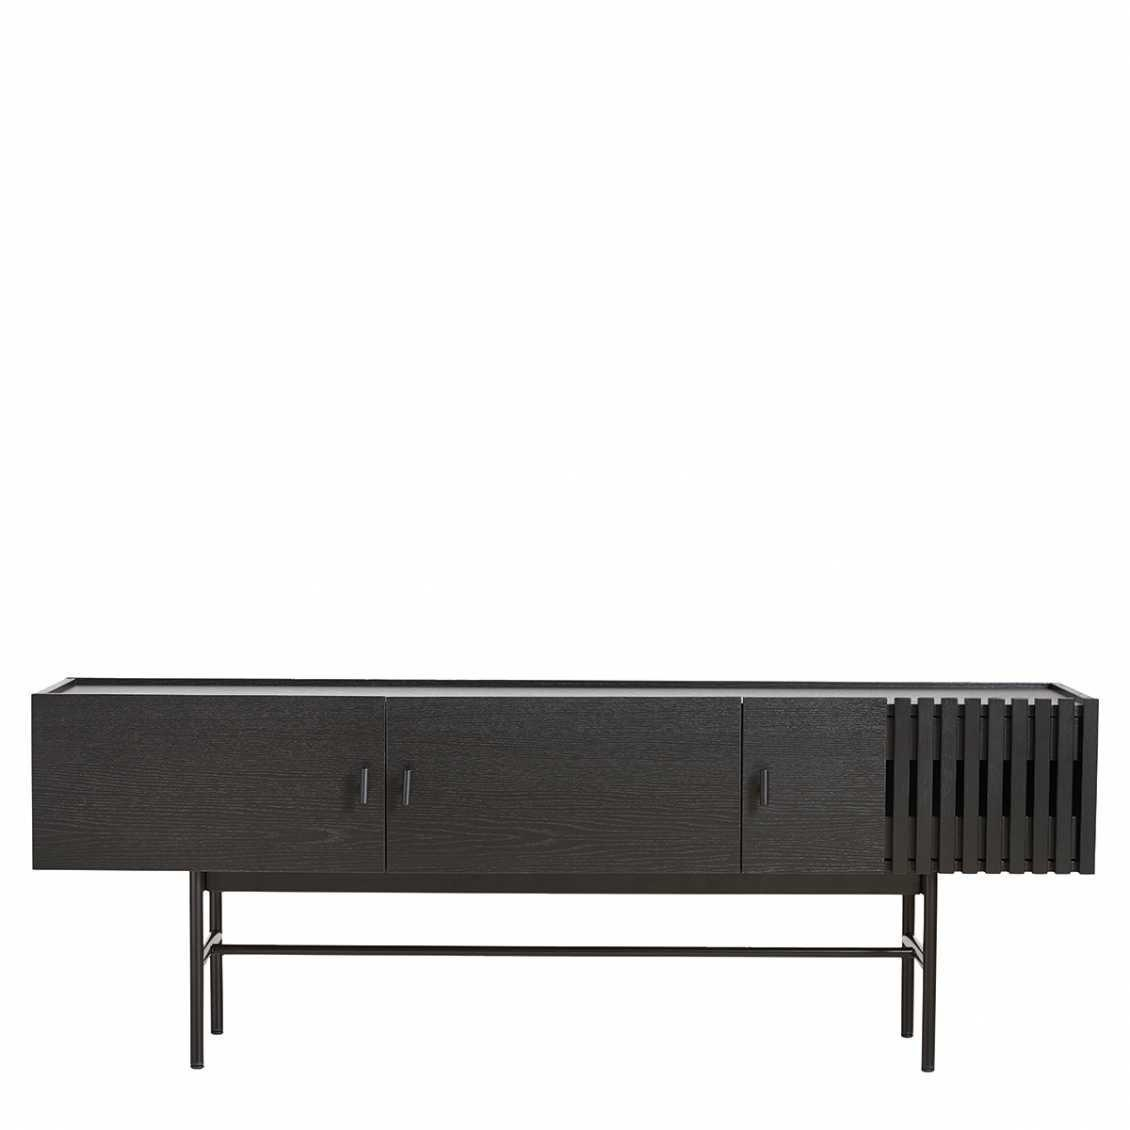 https://www.fundesign.nl/media/catalog/product/a/r/array-tv-meubel-eiken-zwart-1_1.jpg